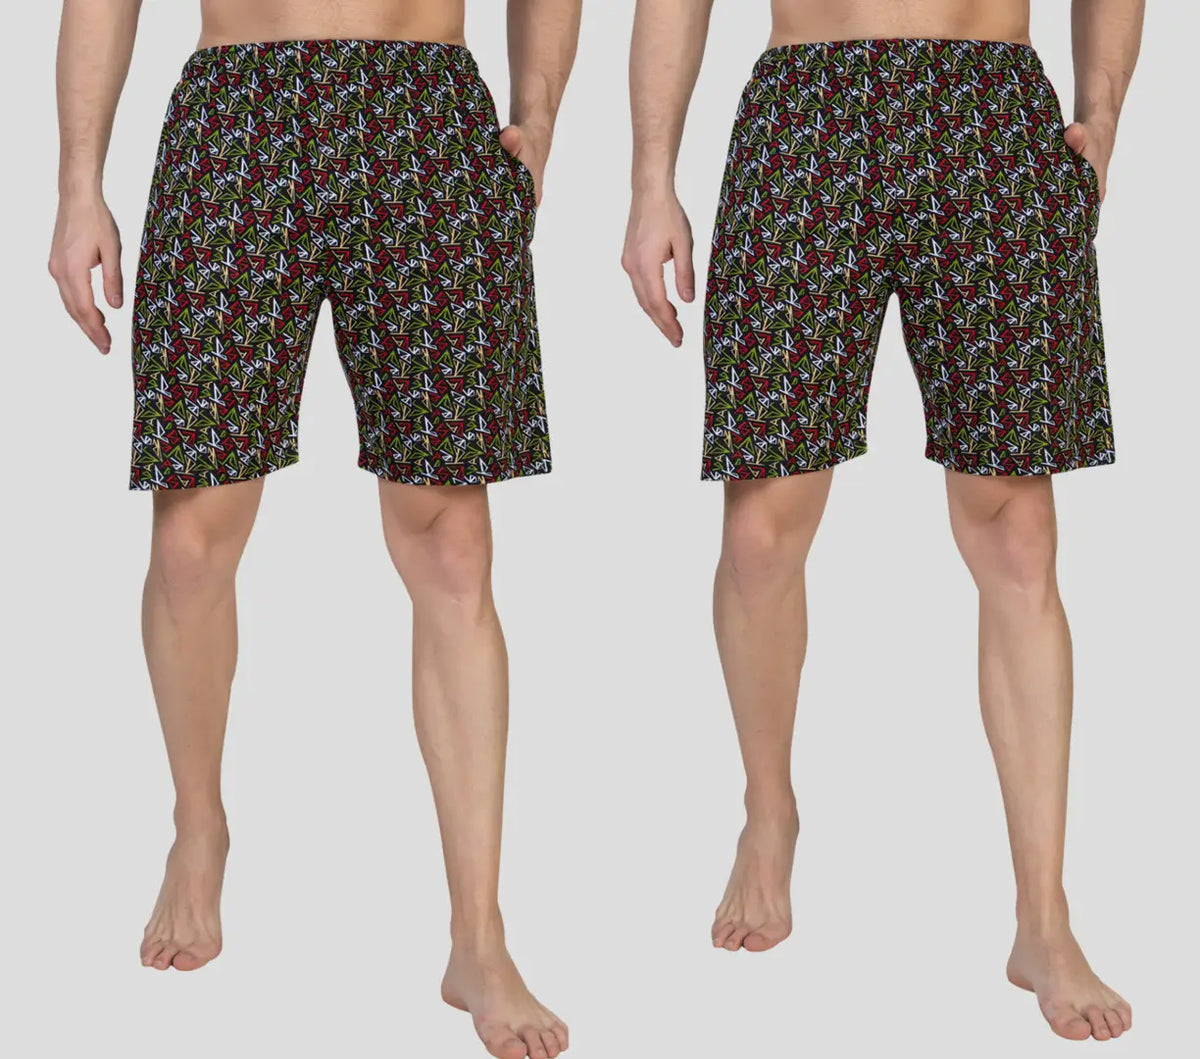 Zeffit 100% Cotton printed Regular Fit Men Shorts | Elastic Waistband  Two Side Pockets Shorts of Men Pack of 2 - Olive